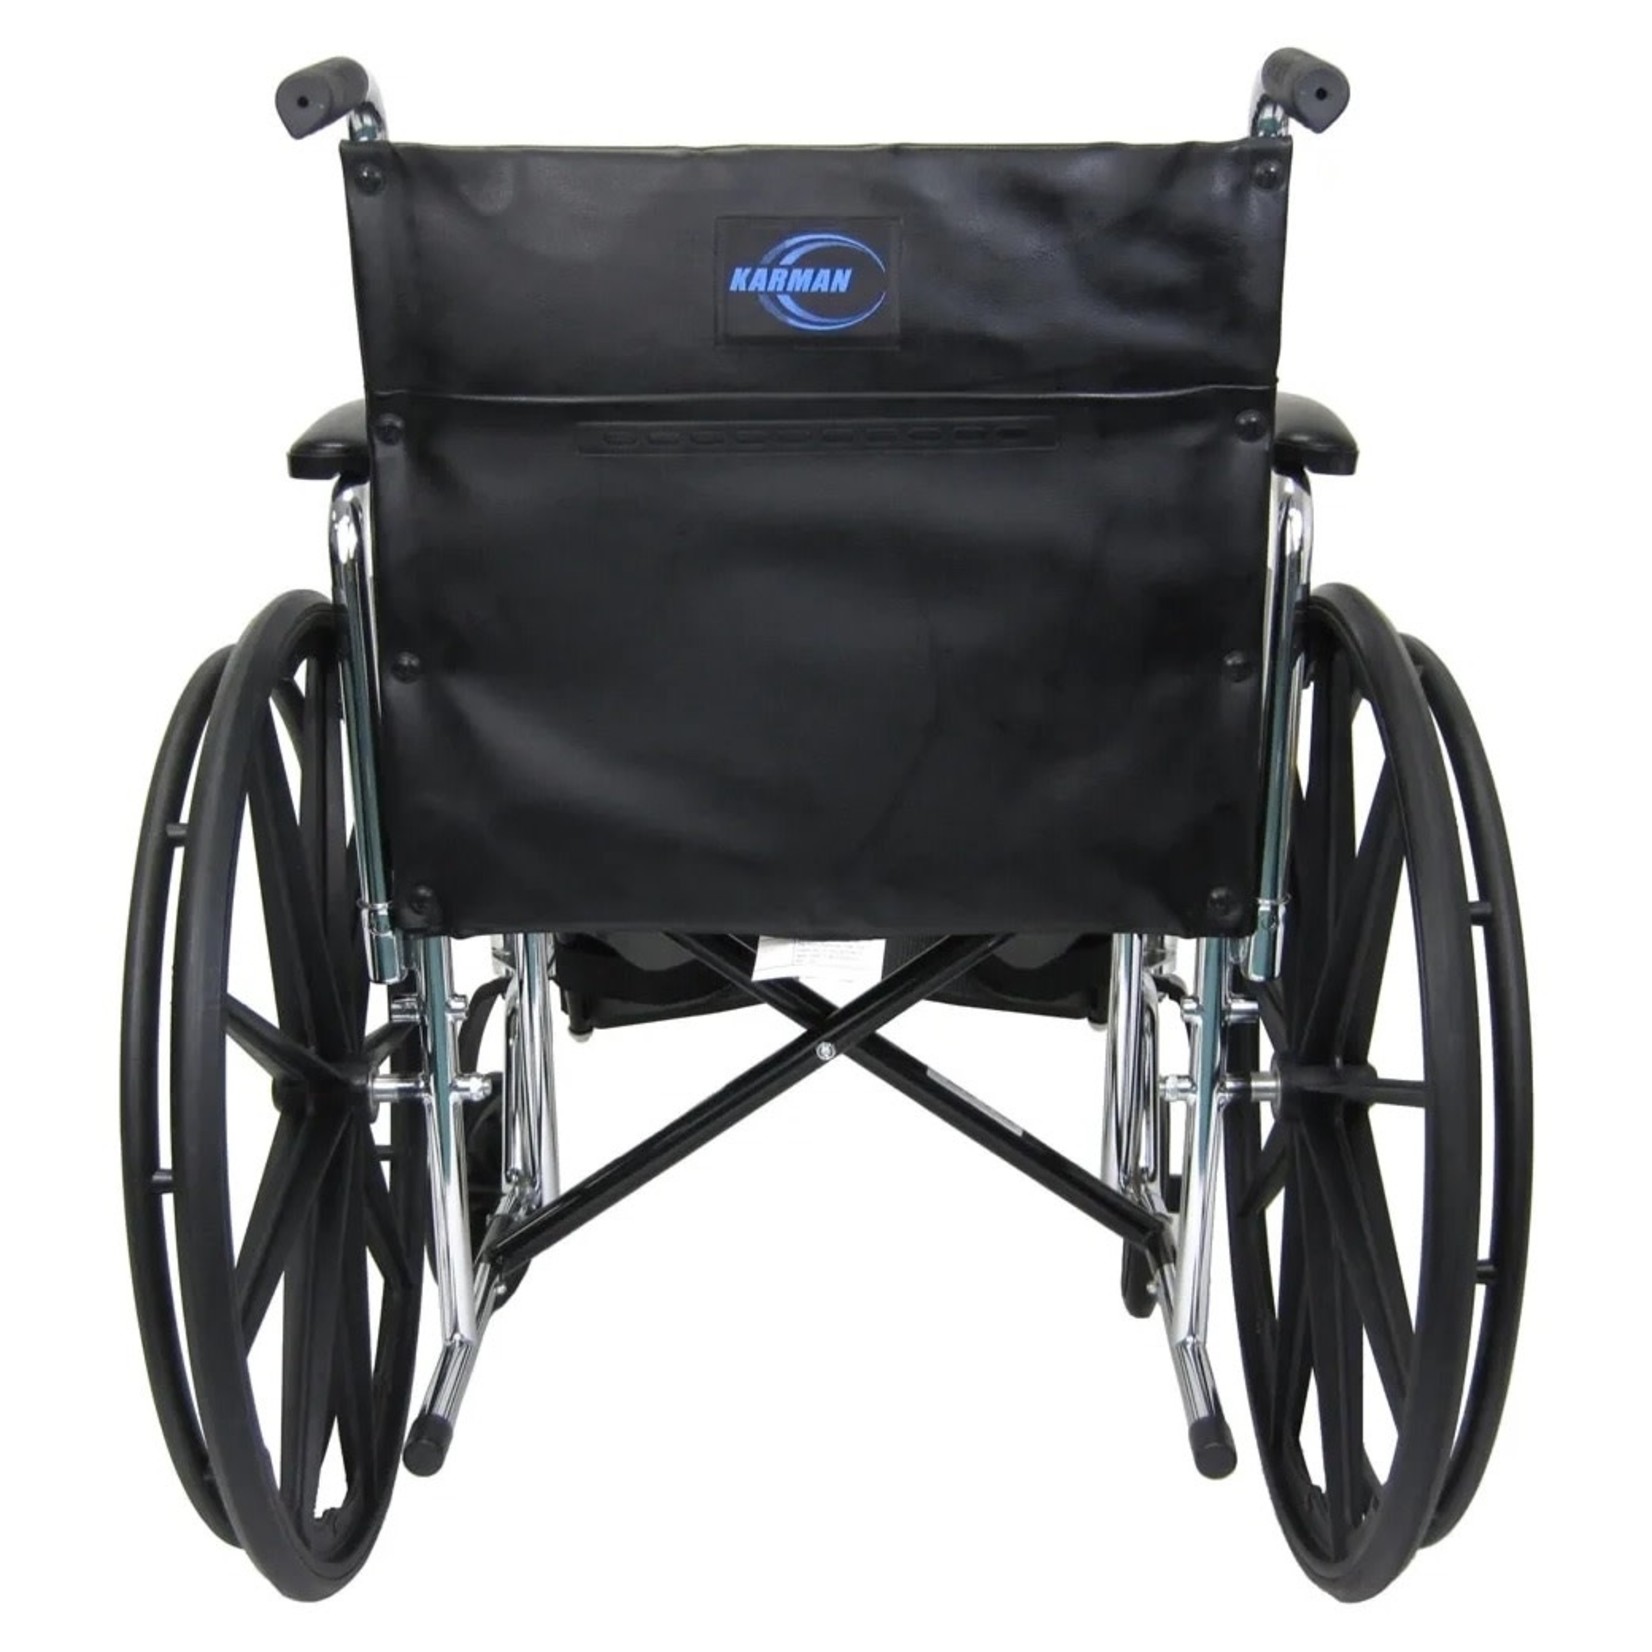 Karman KN-900W Heavy Duty Wheelchair